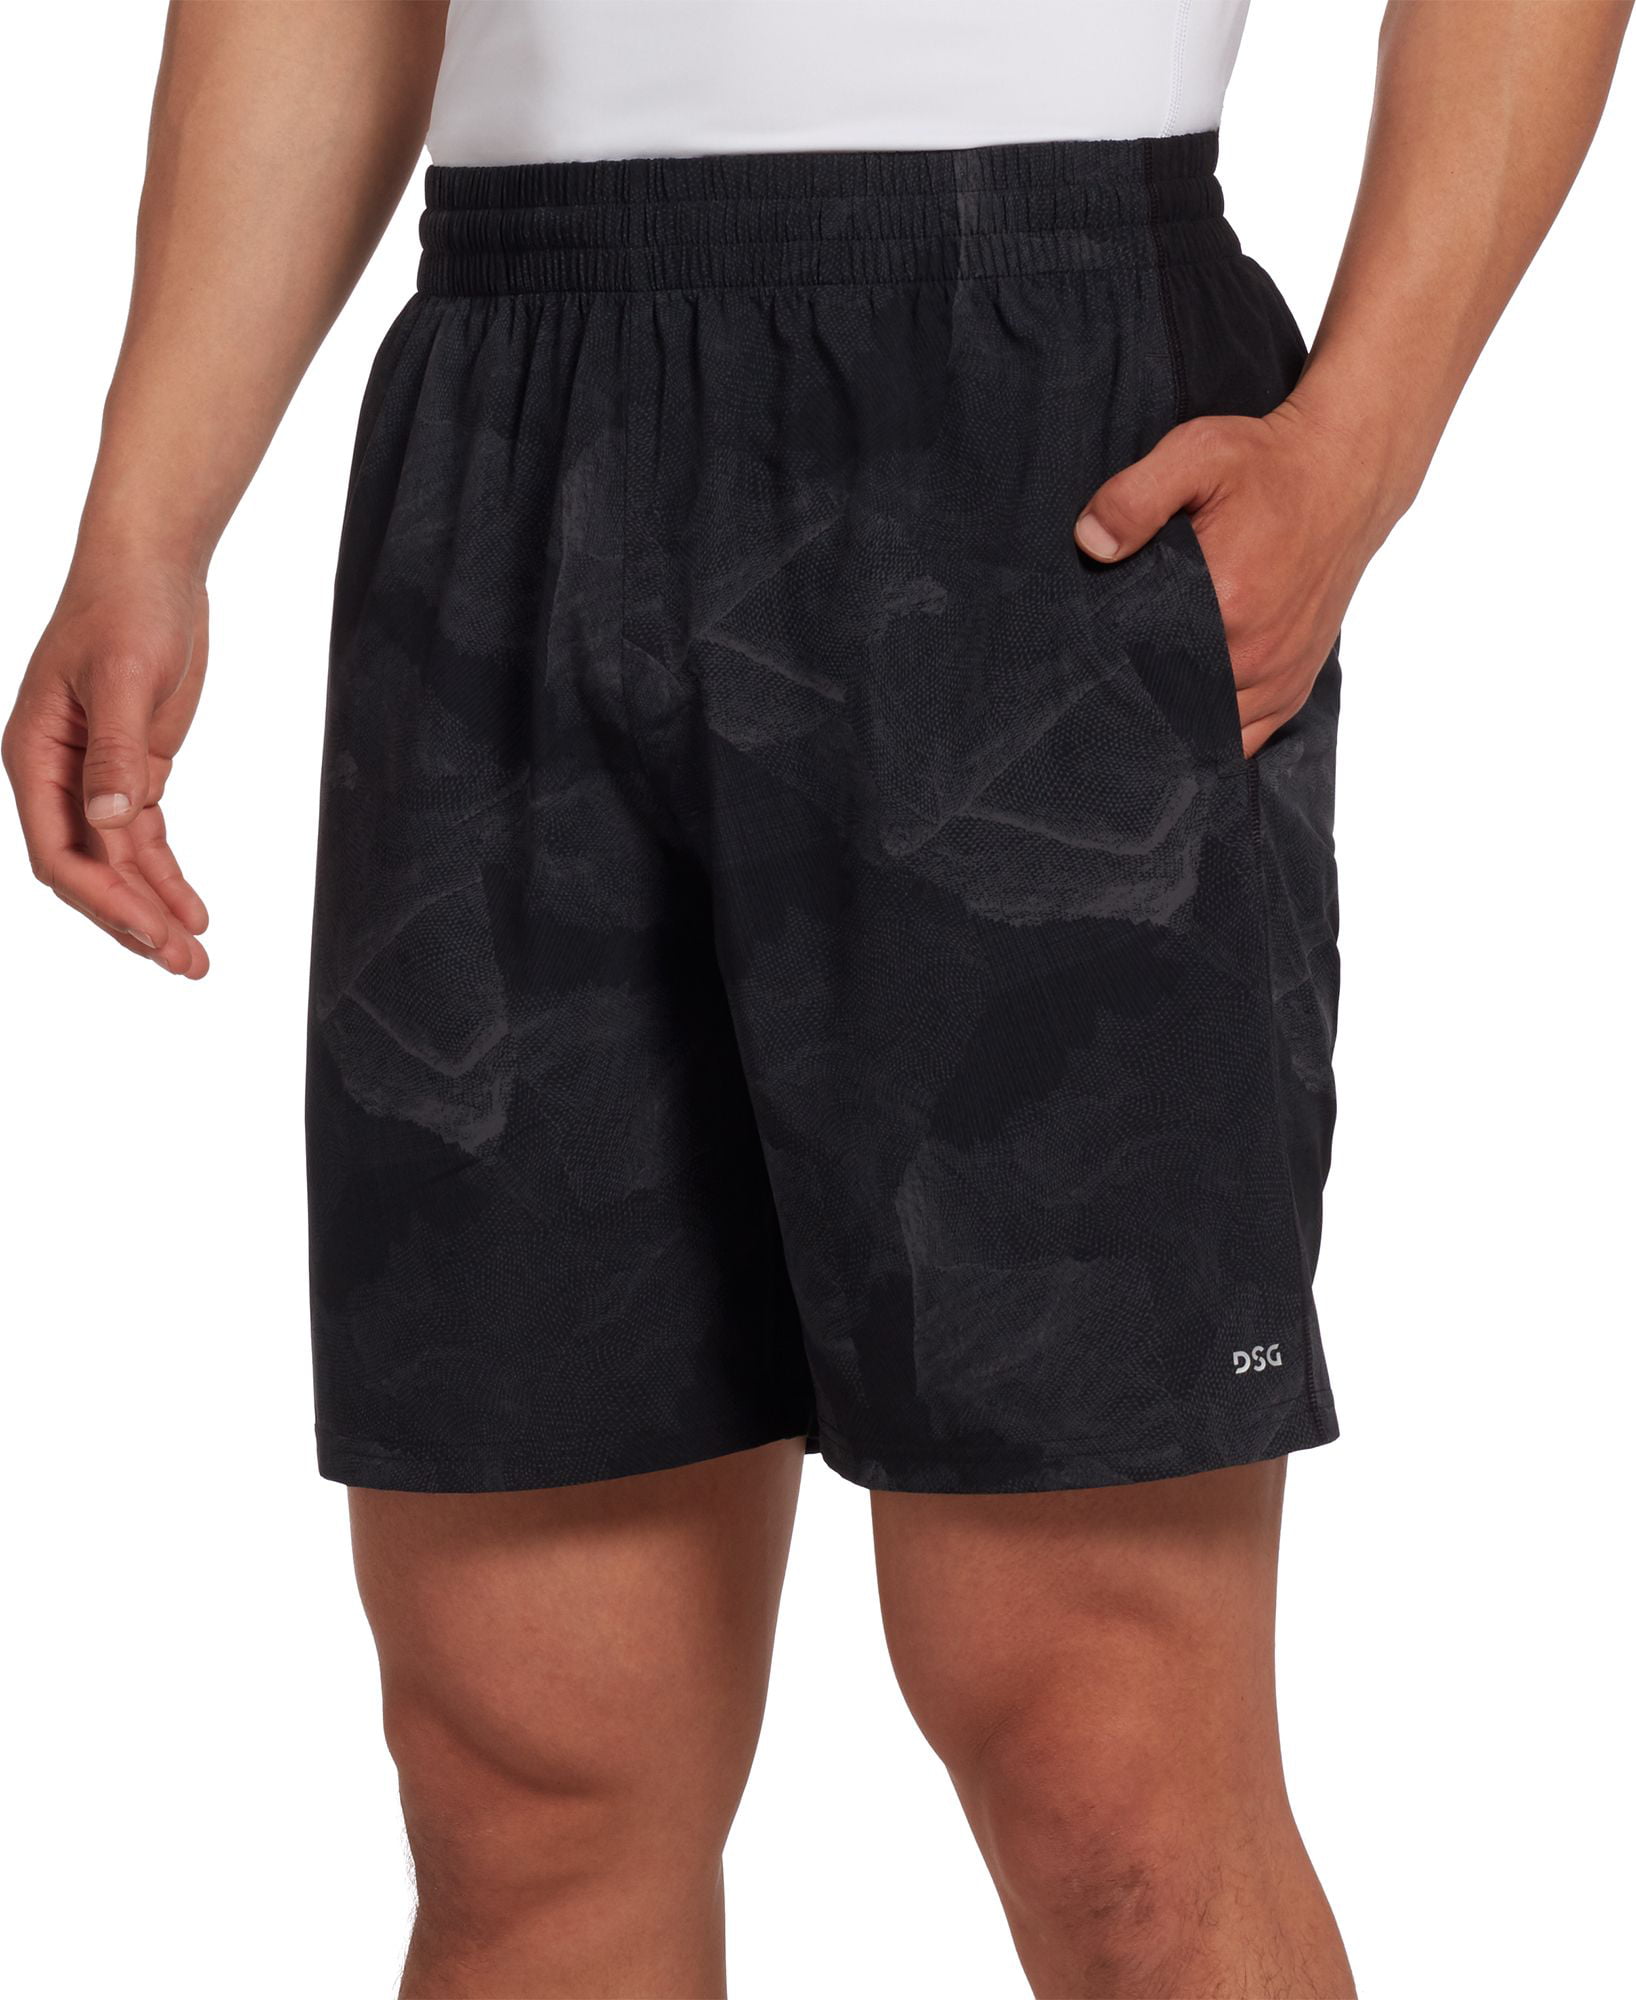 DSG Outerwear - DSG Men's Woven Training Shorts - Walmart.com - Walmart.com